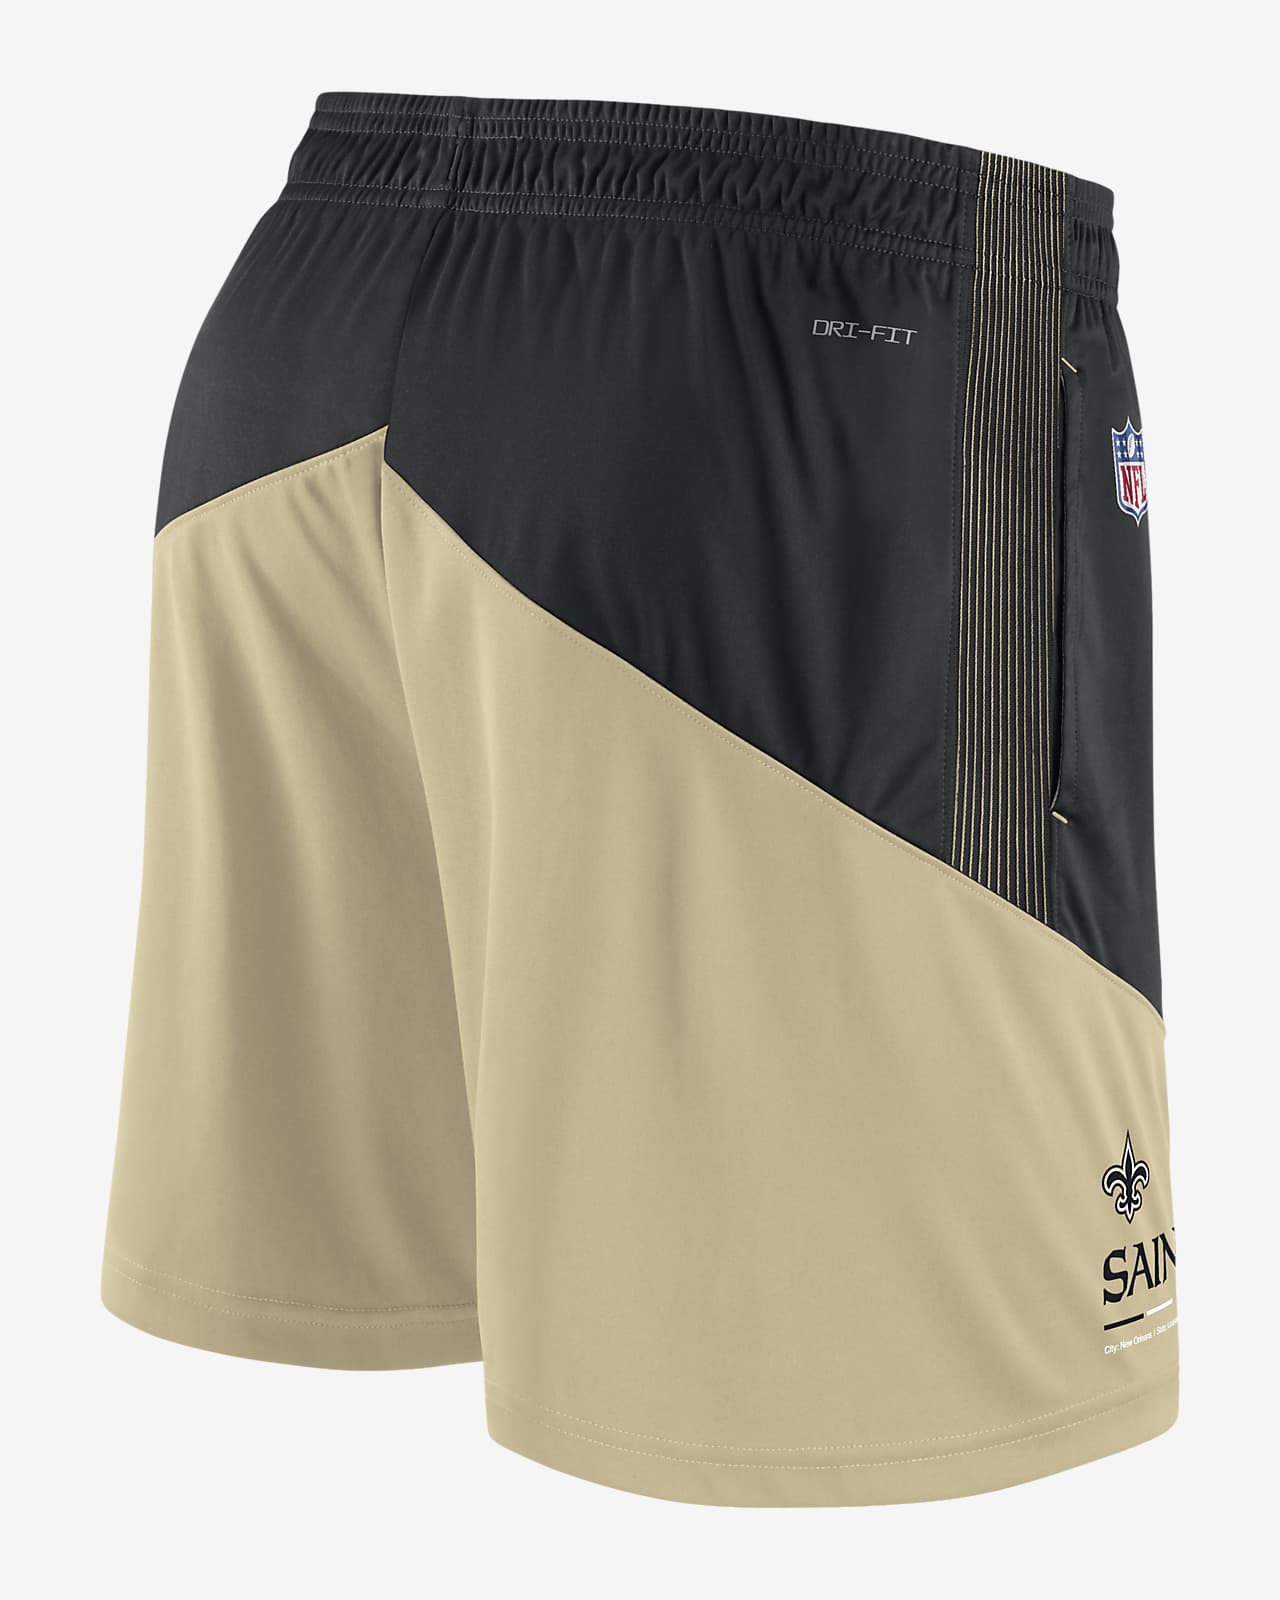 Nike Dri-FIT Flex (MLB St. Louis Cardinals) Men's Shorts.